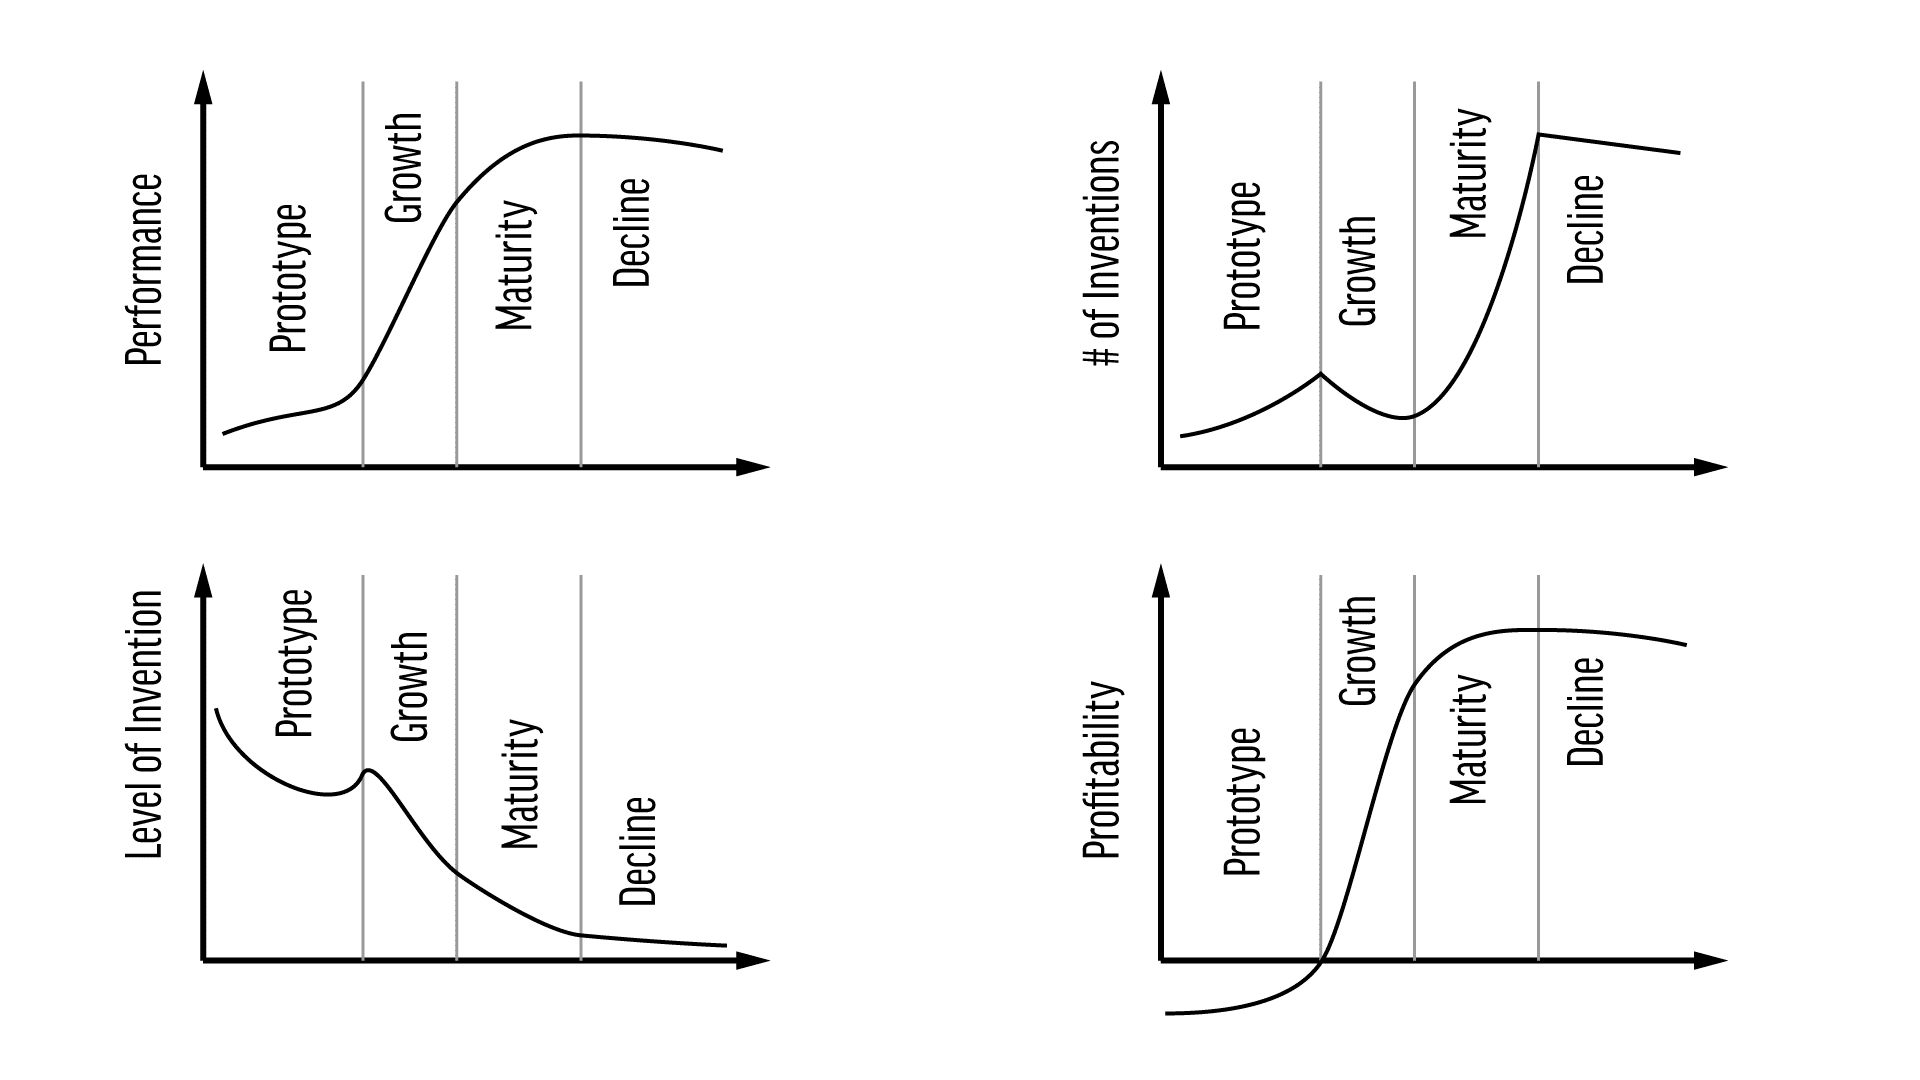 Curve Technologies